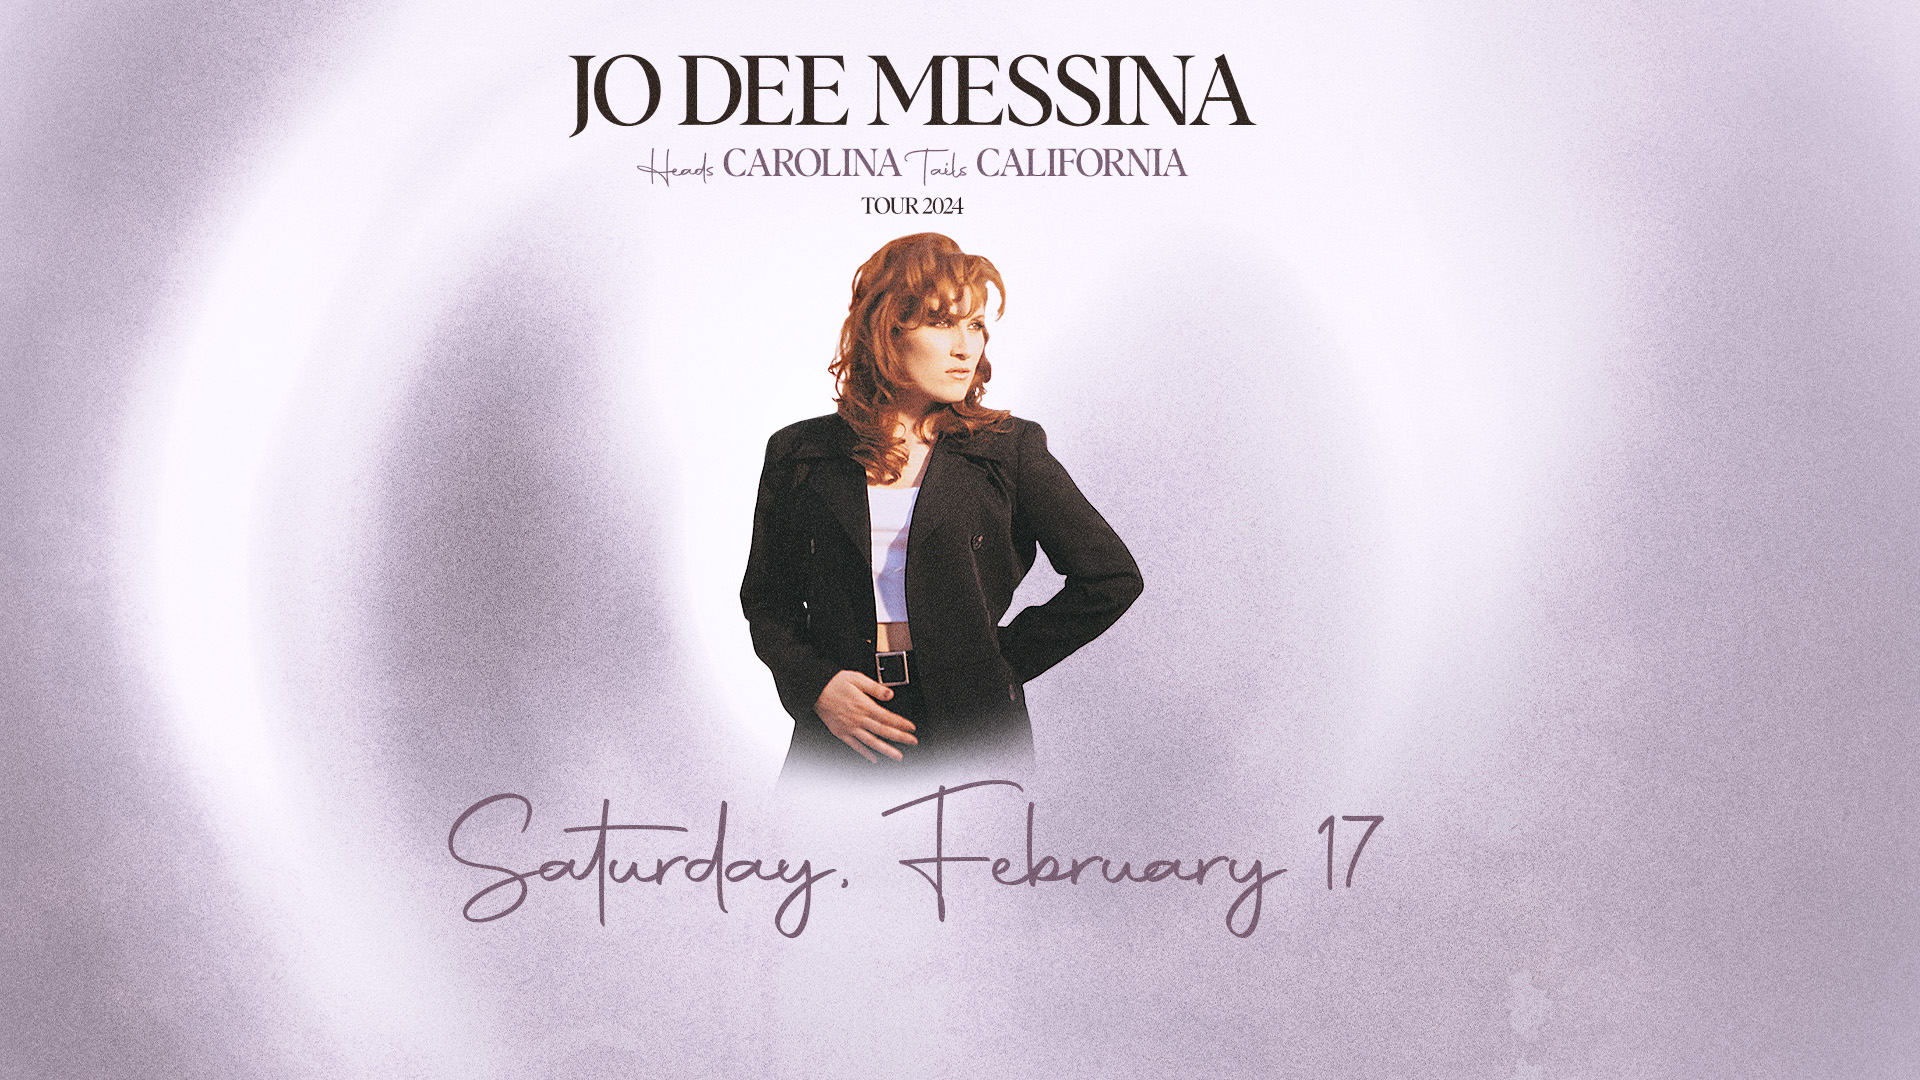 Jo Dee Messina: The Heads Carolina, Tails California Tour